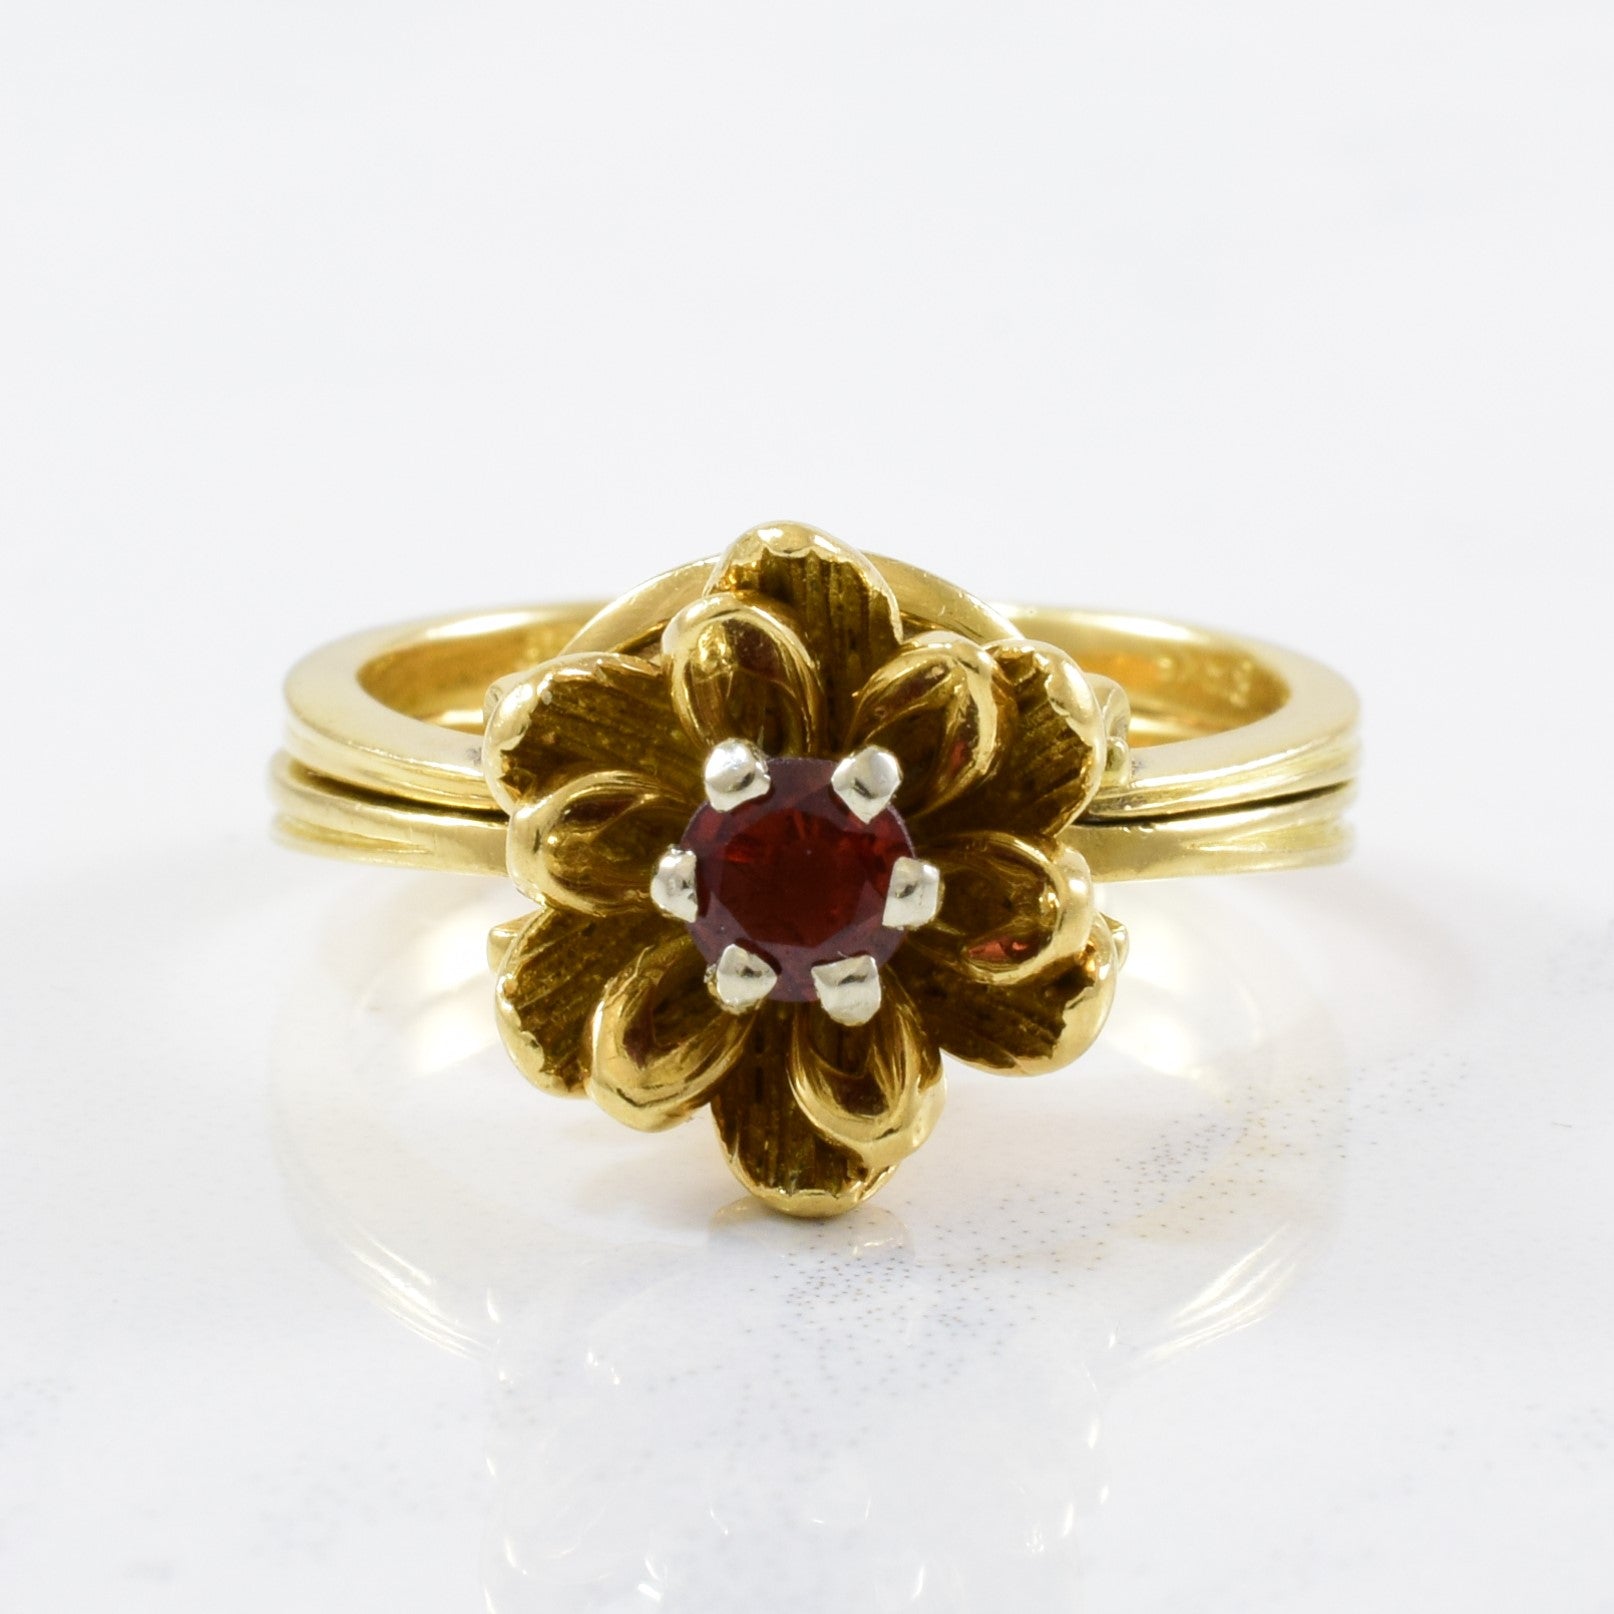 'Birks' Floral Garnet Ring Circa 1950s | 0.20ct | SZ 4.75 |